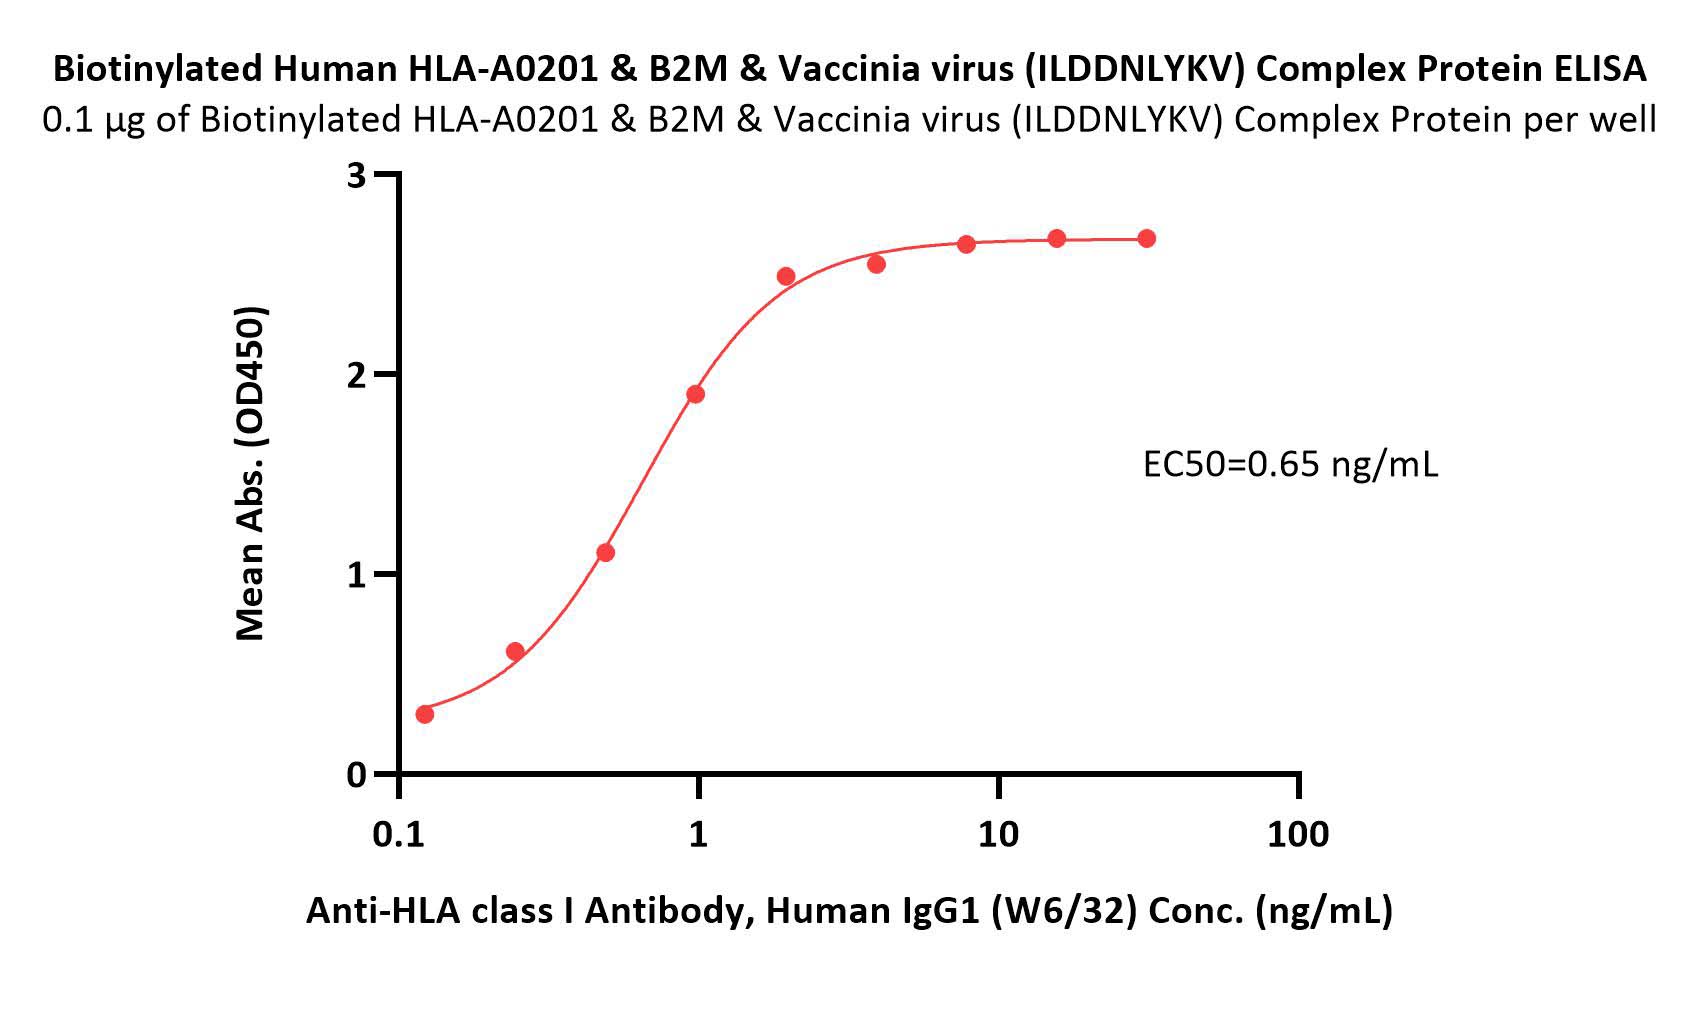 HLA-A*0201 & B2M & Vaccinia virus (ILDDNLYKV) ELISA